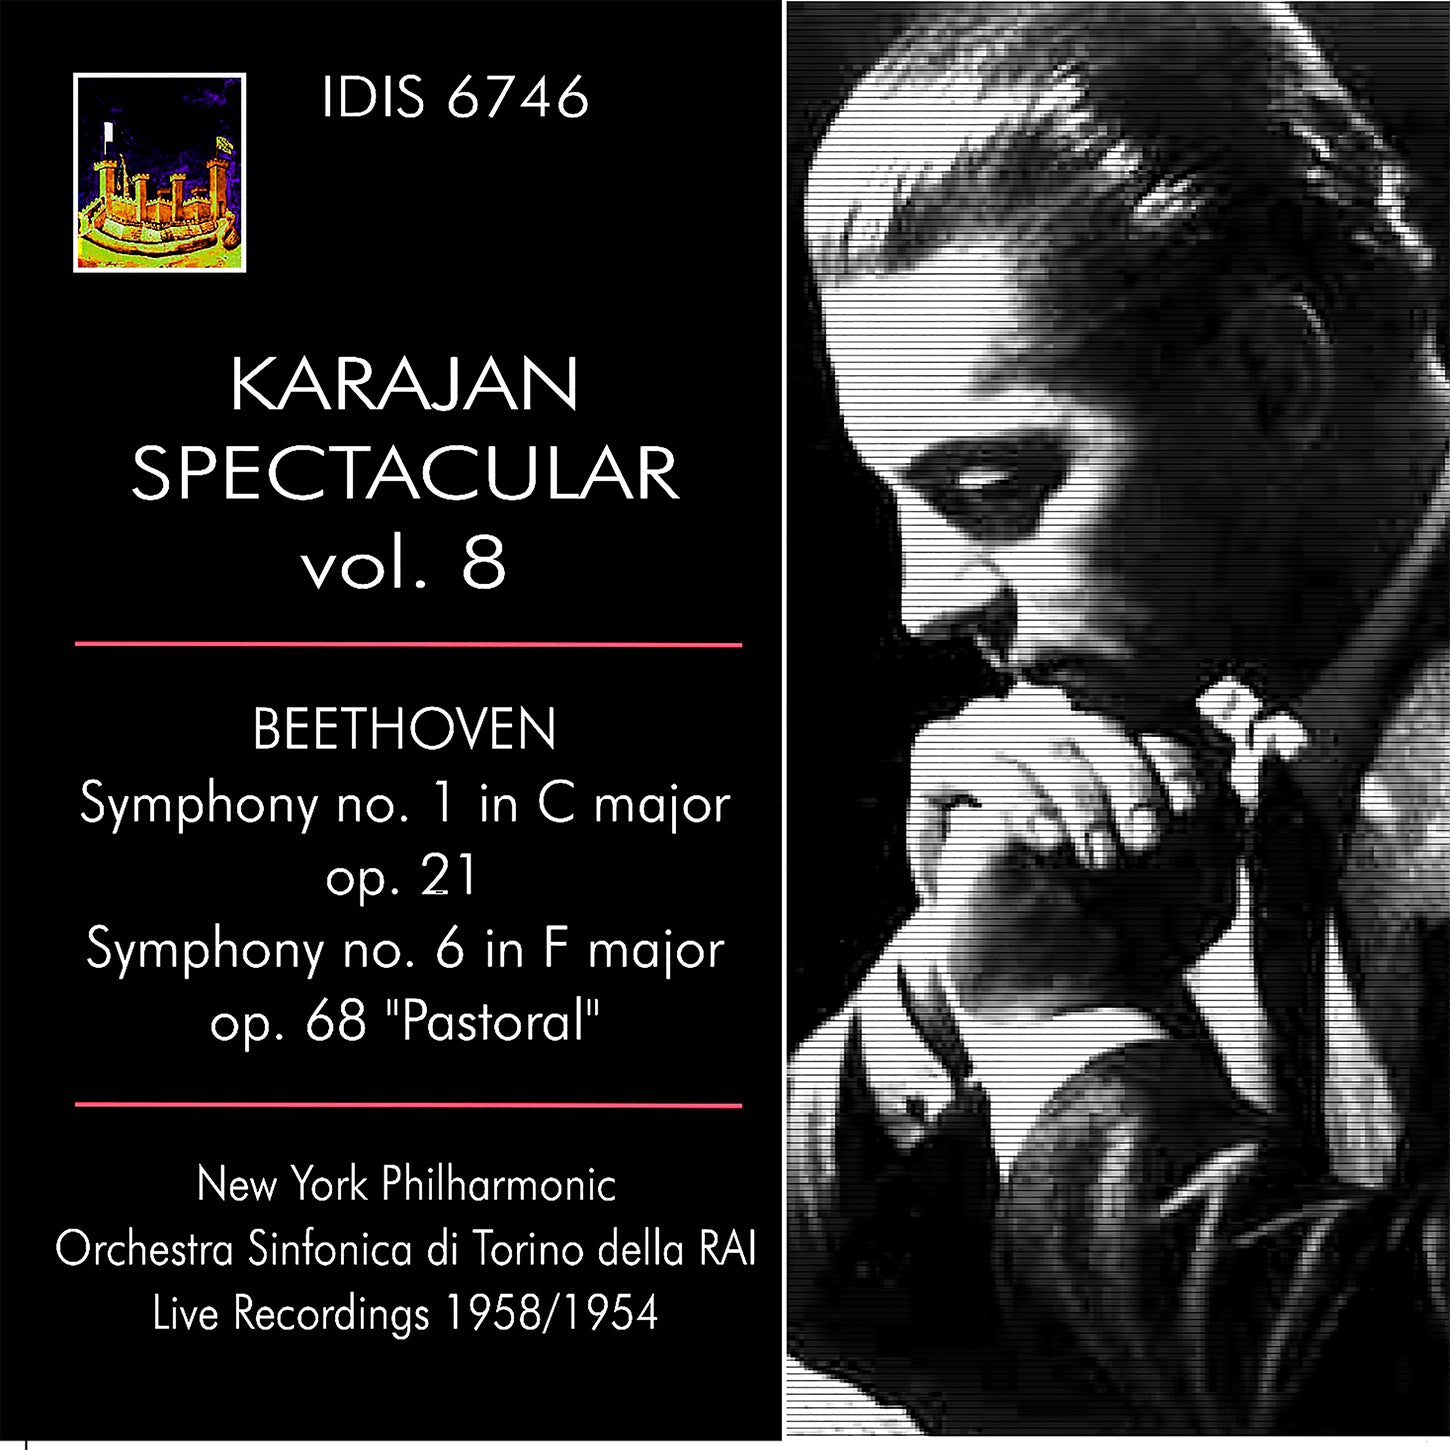 Beethoven: Karajan Spectacular, Vol. 8 / Karajan, New York Philharmonic, Orchestra Sinfonica Nazionale della RAI di Torino